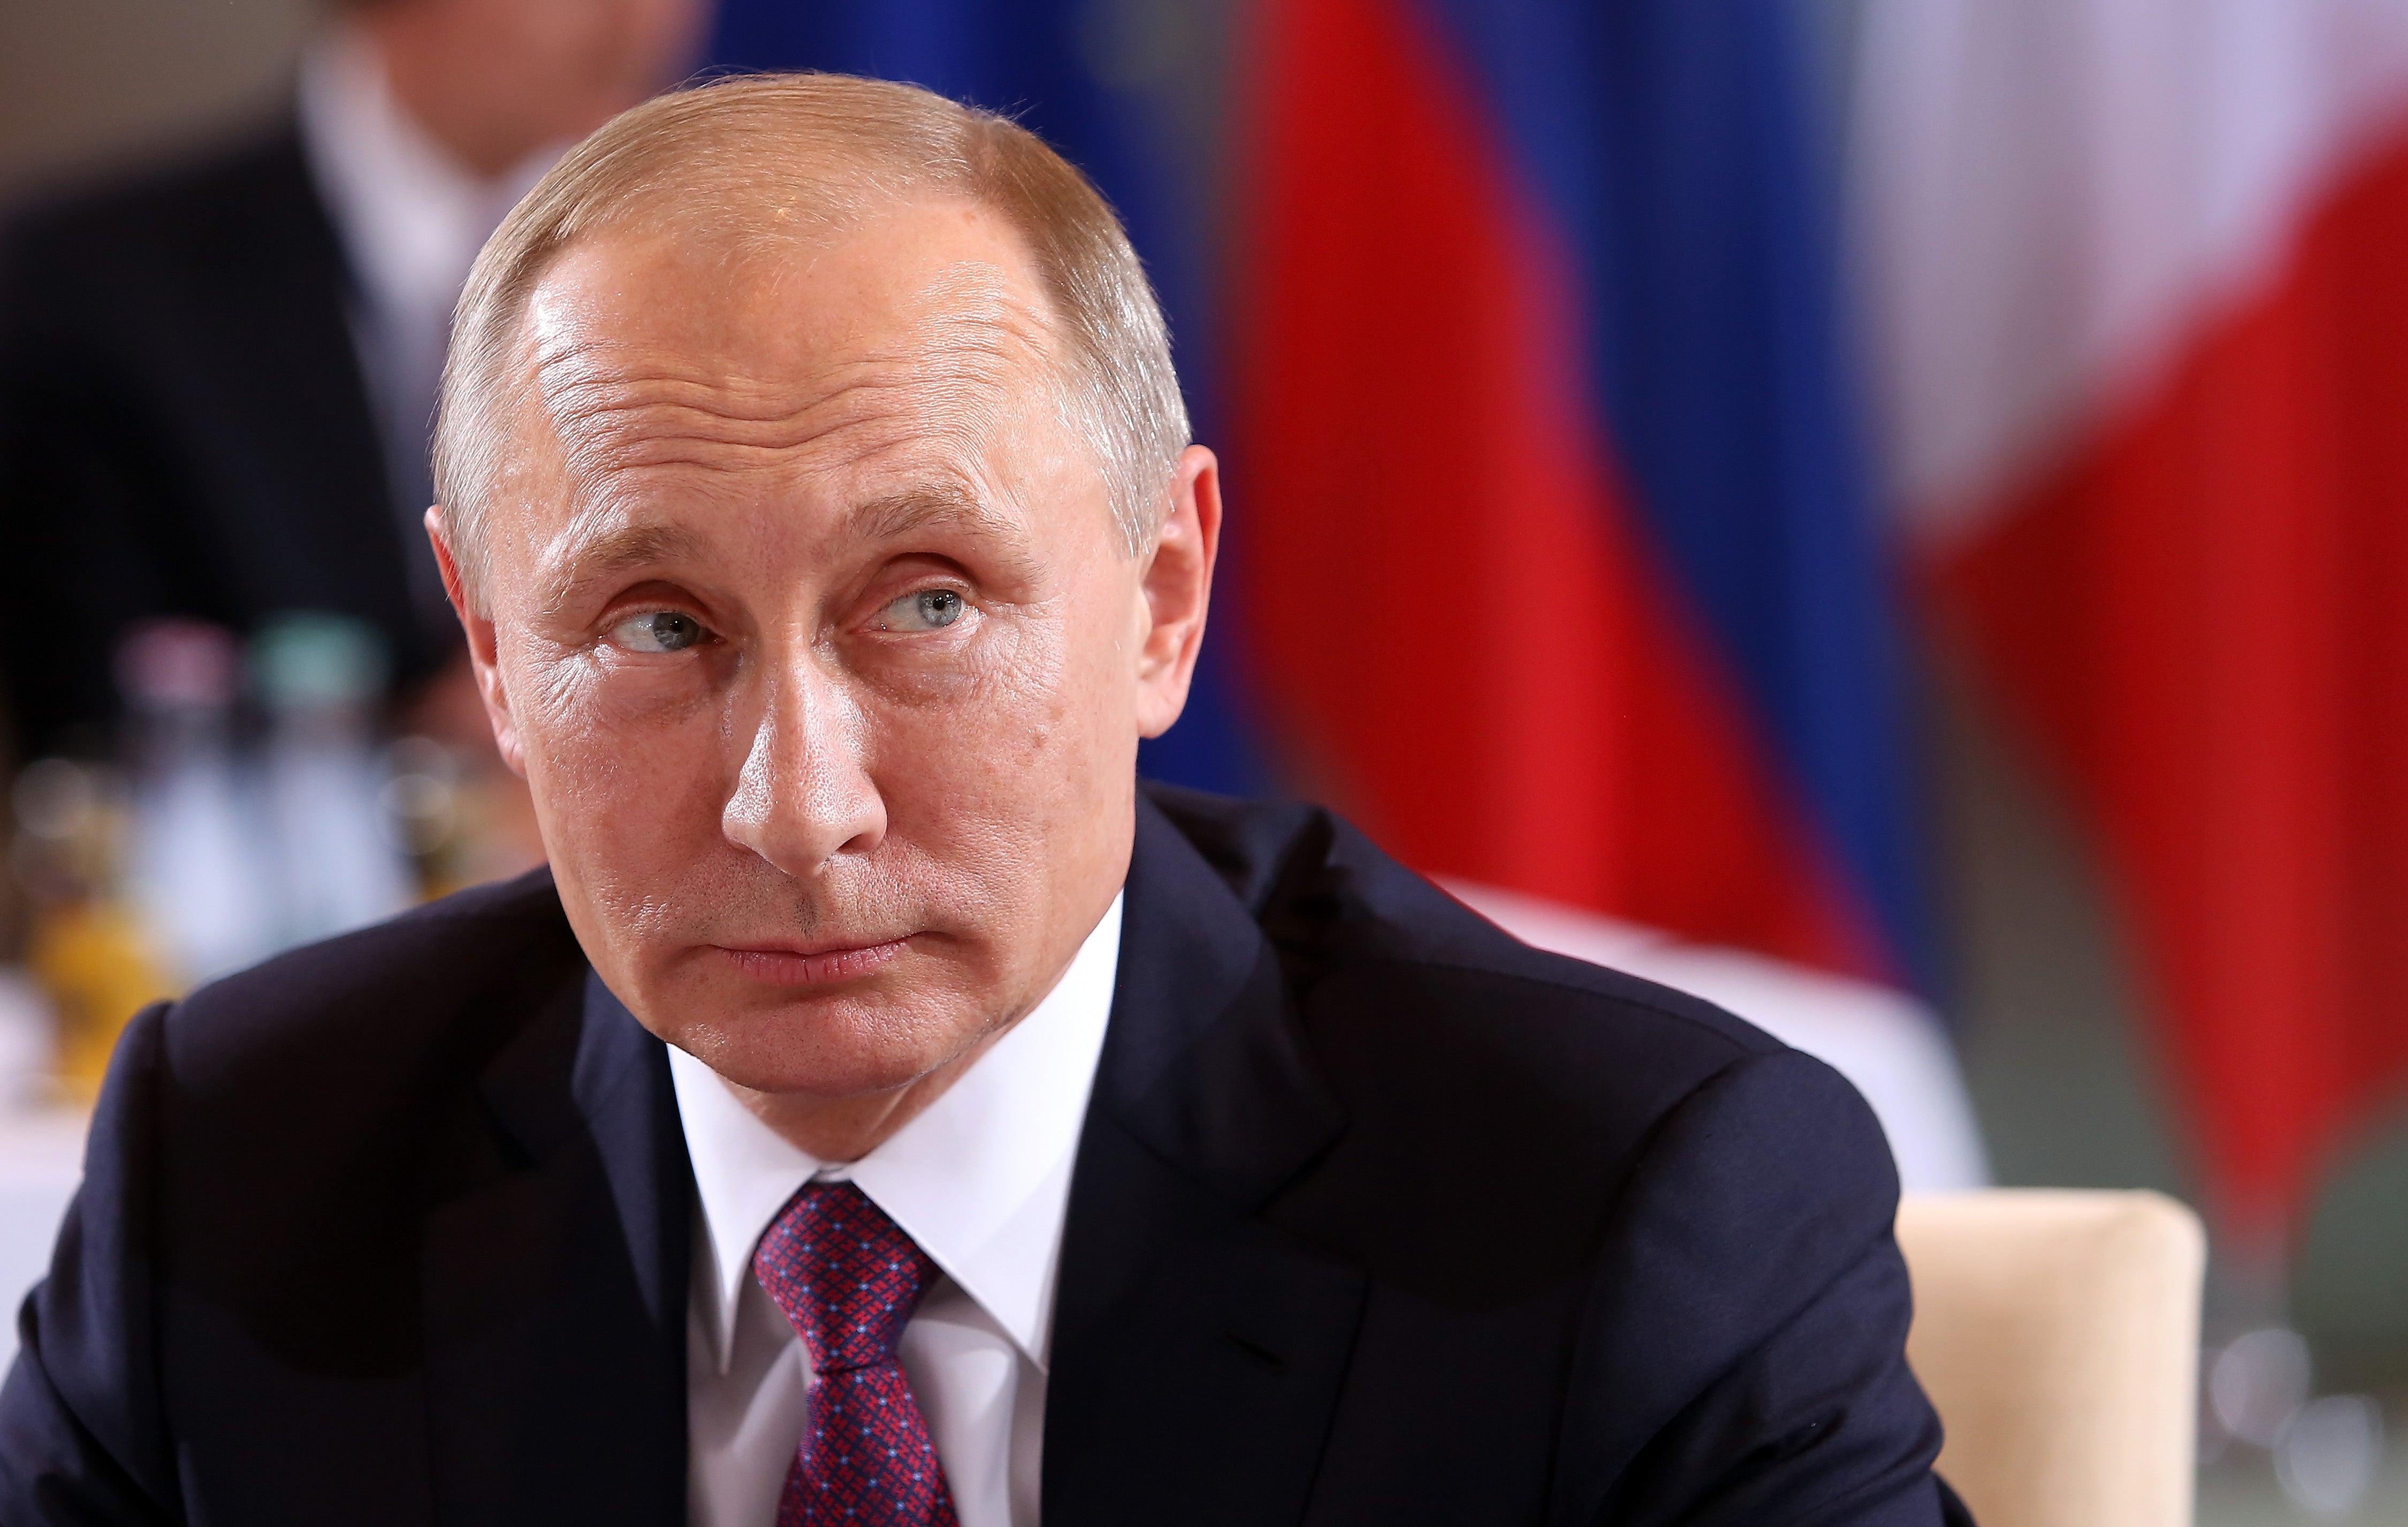 Vladimir Putin ‘Ordered’ Election Influence, Declassified U.S. Intelligence Report Says
